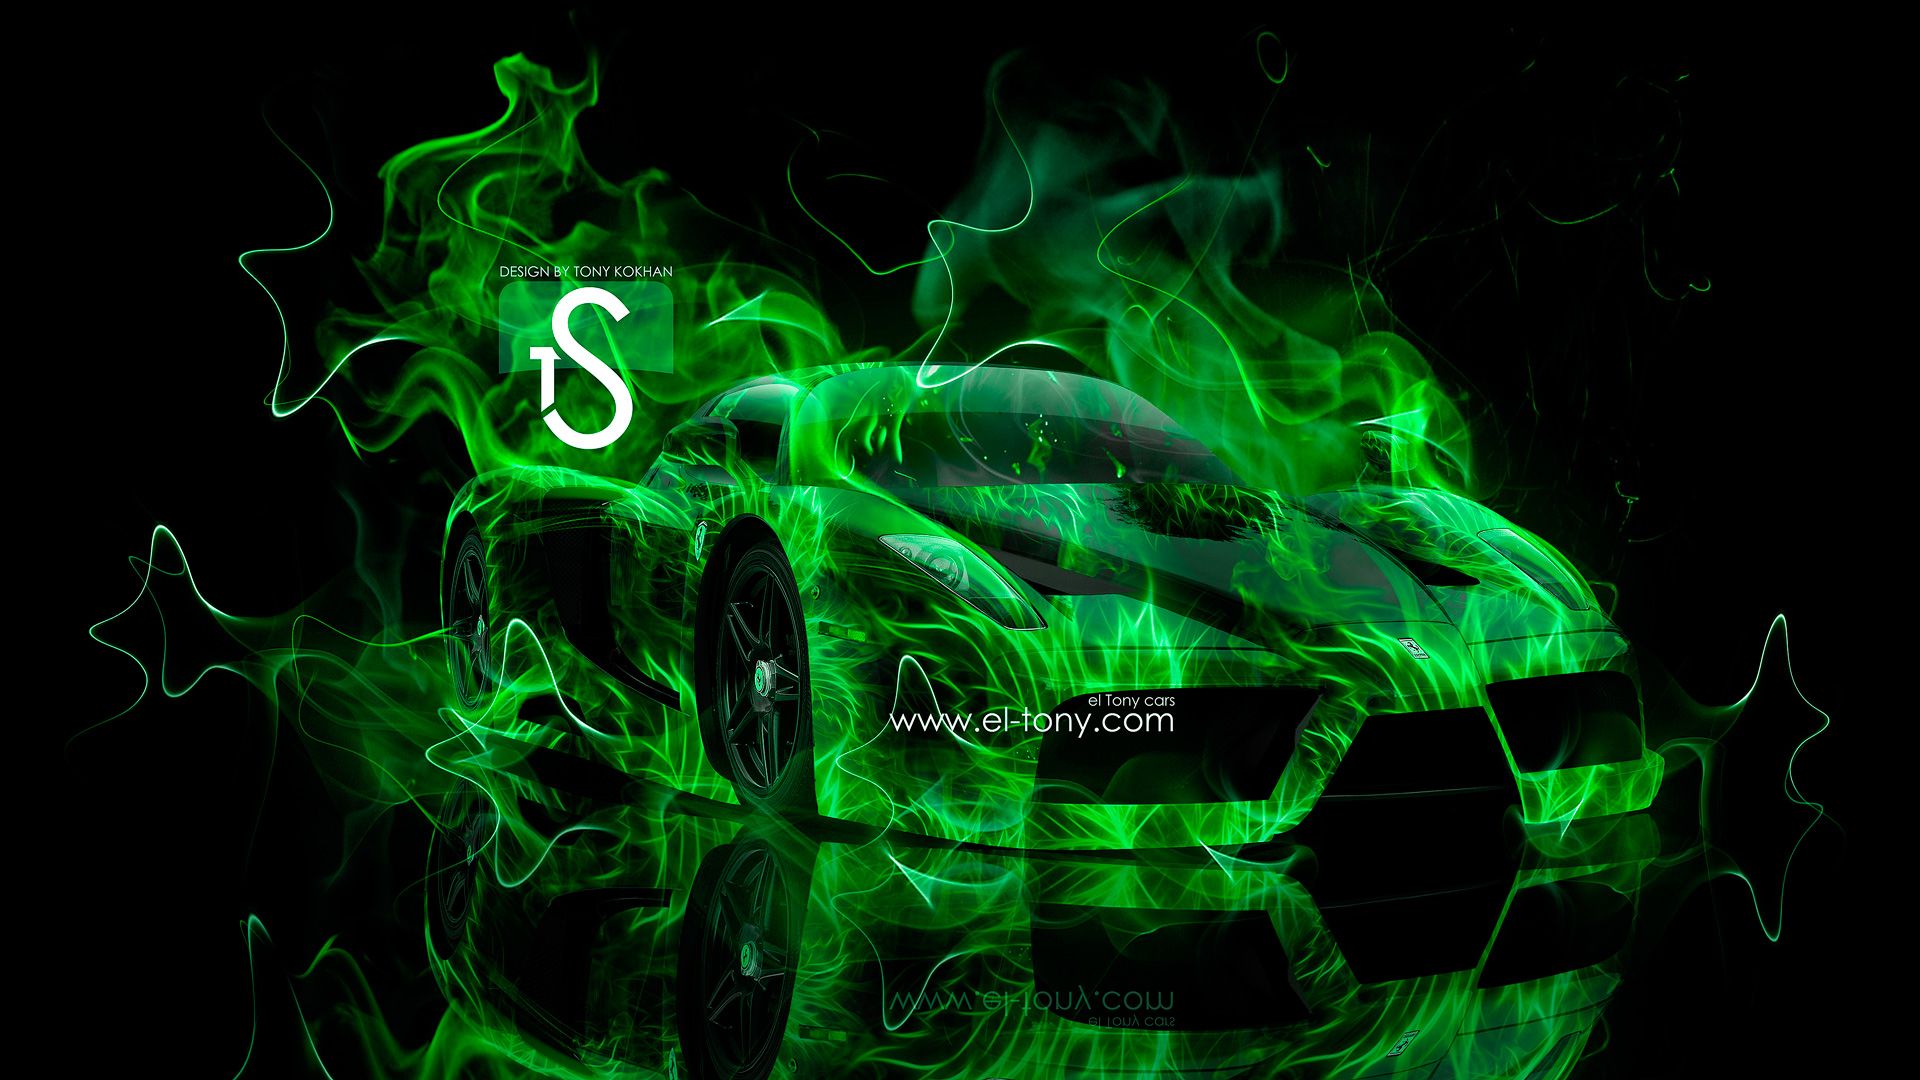 Ferrari Enzo Green Fire Car 2013 Abstract Smoke HD Wallpaper Car HD